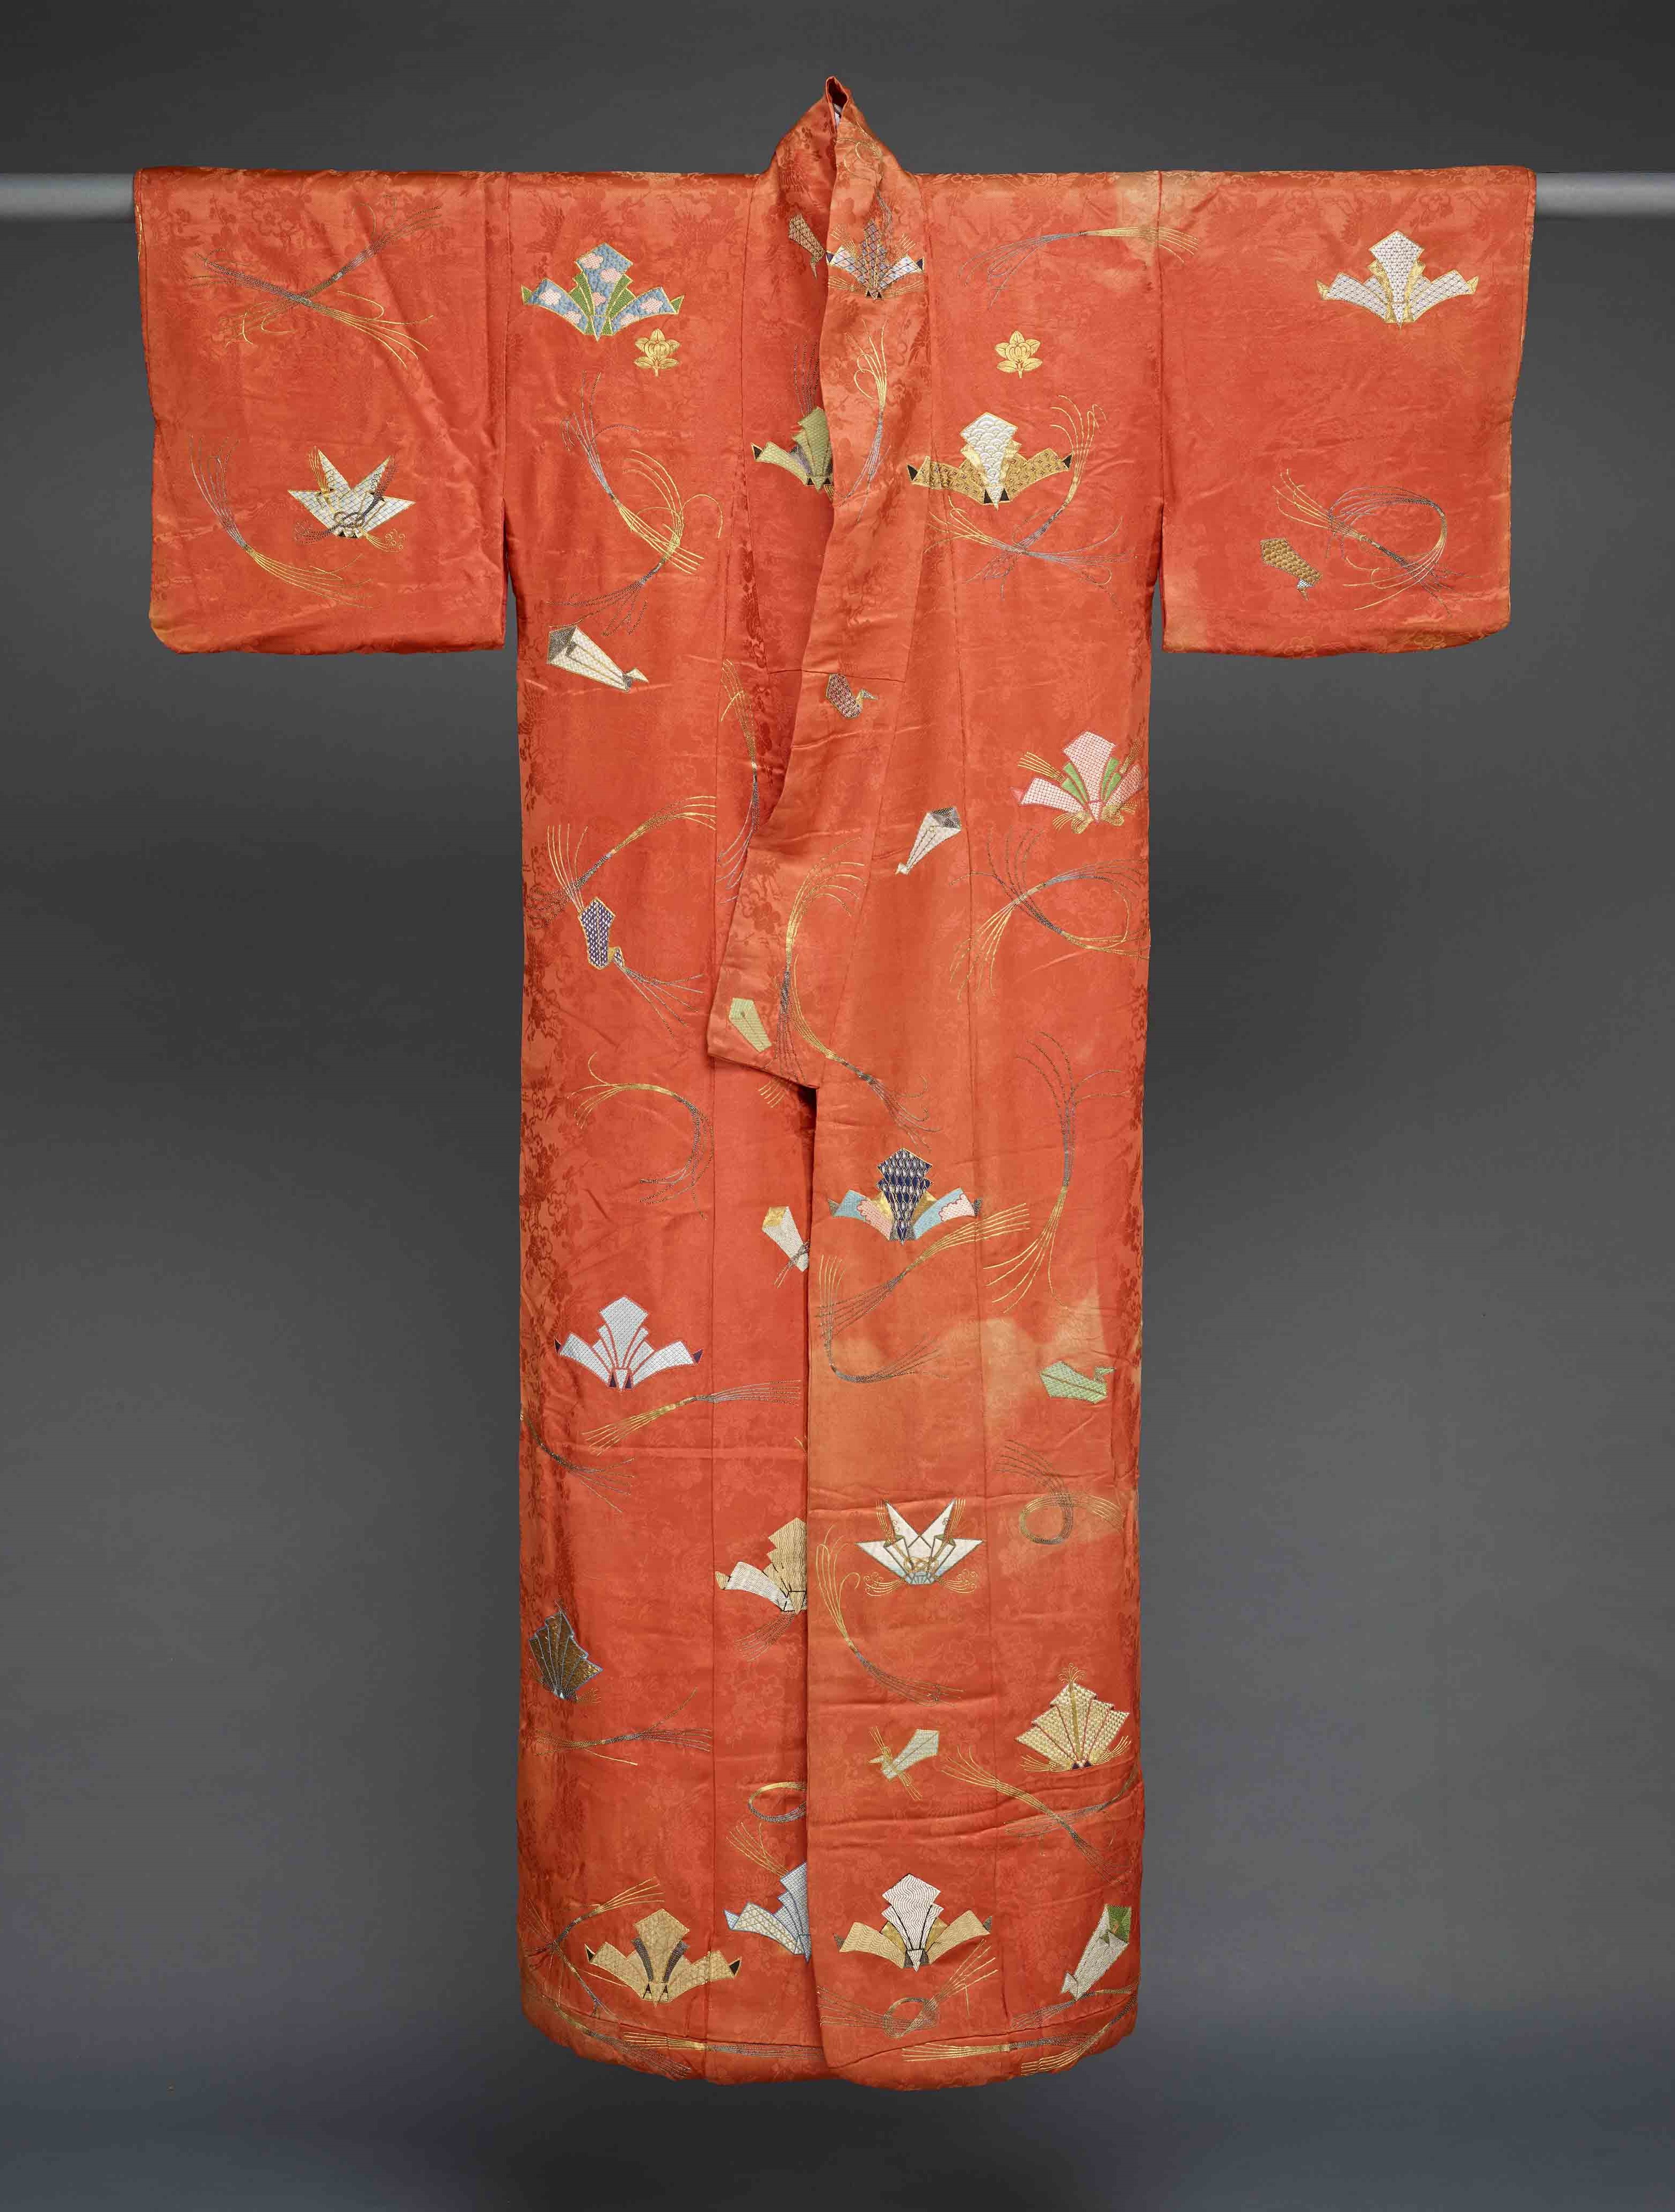 Overcoat (Uchikake) with folded-paper design